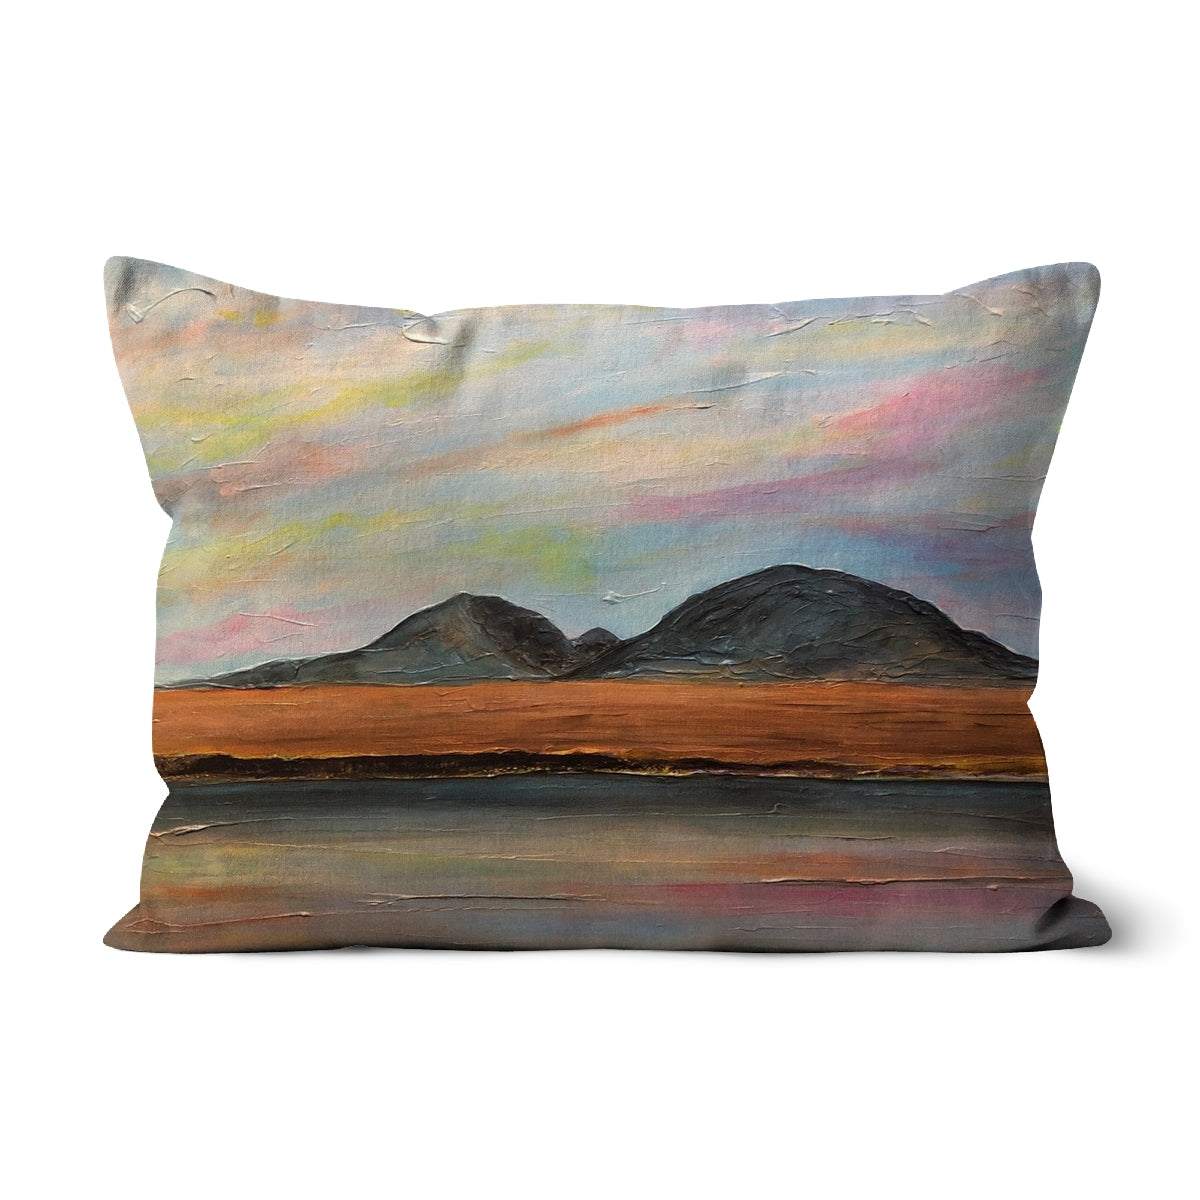 Jura Dawn Art Gifts Cushion-Cushions-Hebridean Islands Art Gallery-Canvas-19"x13"-Paintings, Prints, Homeware, Art Gifts From Scotland By Scottish Artist Kevin Hunter